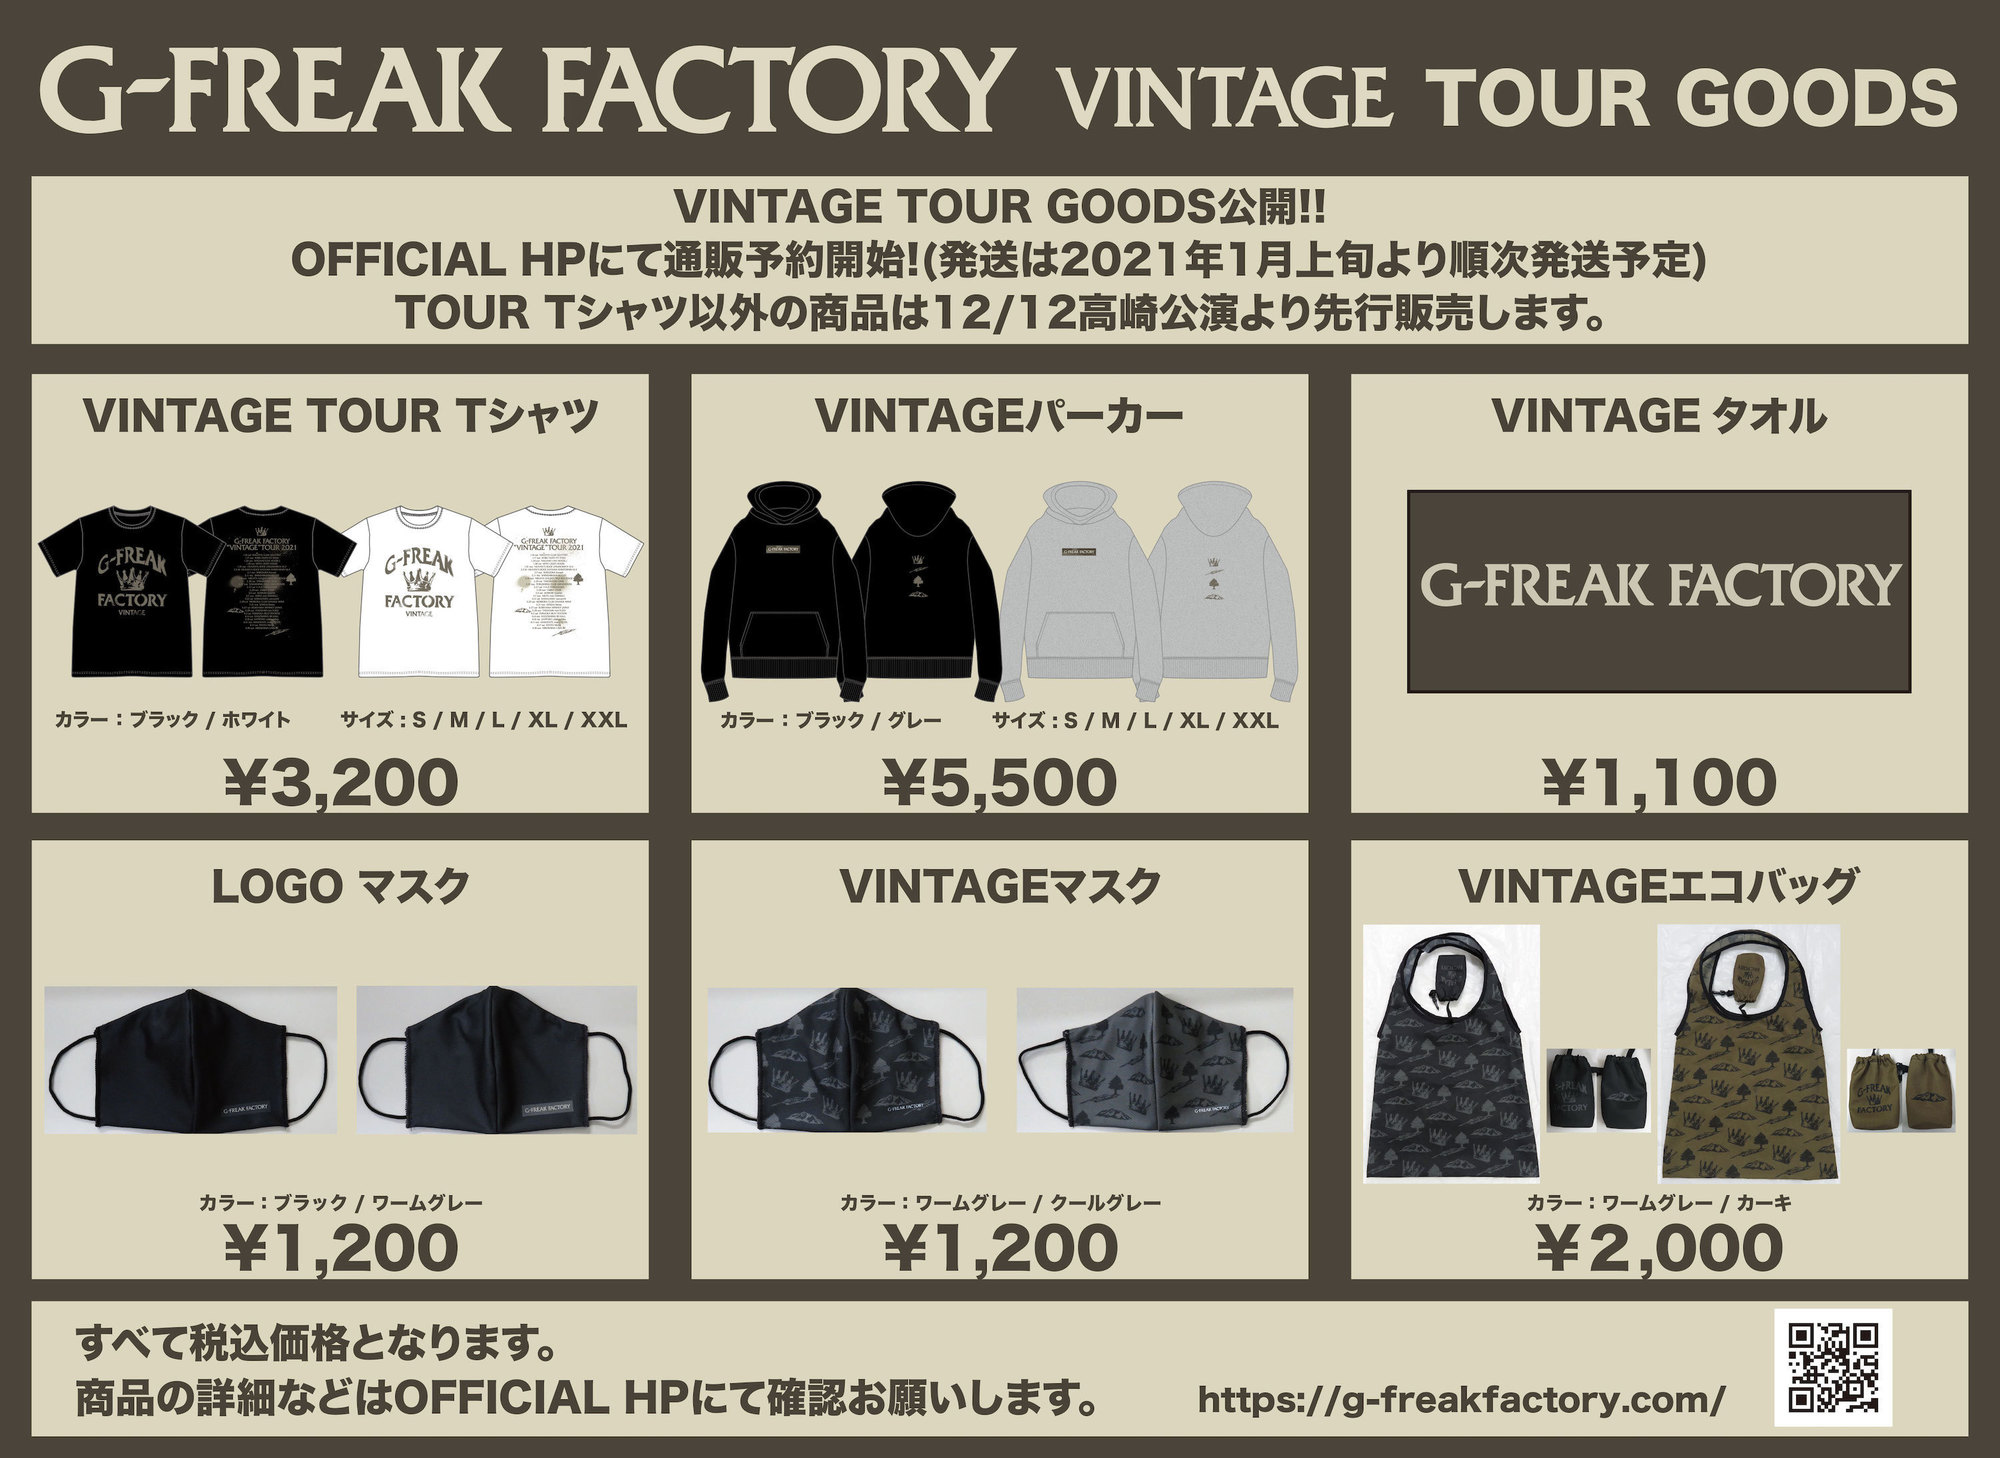 G Freak Factory Vintage Tour 21 Tour Goodsの先行予約販売開始 G Freak Factory Official Website